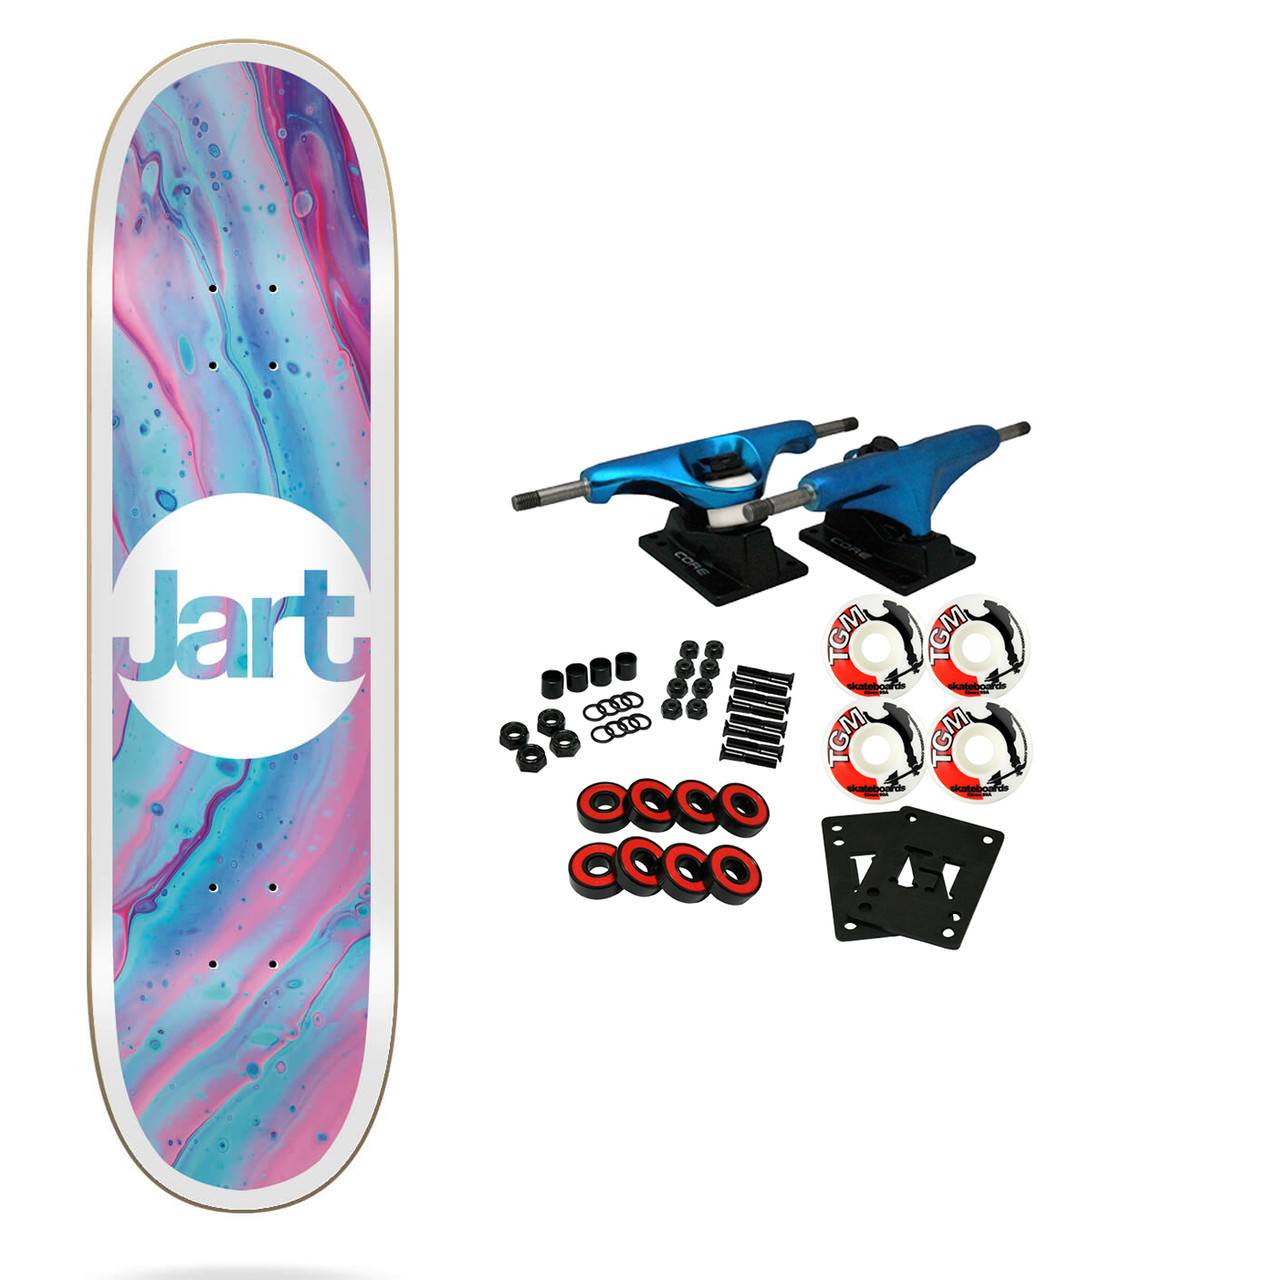 Buitenboordmotor Omgekeerd composiet Jart Skateboard Complete Tie Dye Blue 8.125" x 31.6"